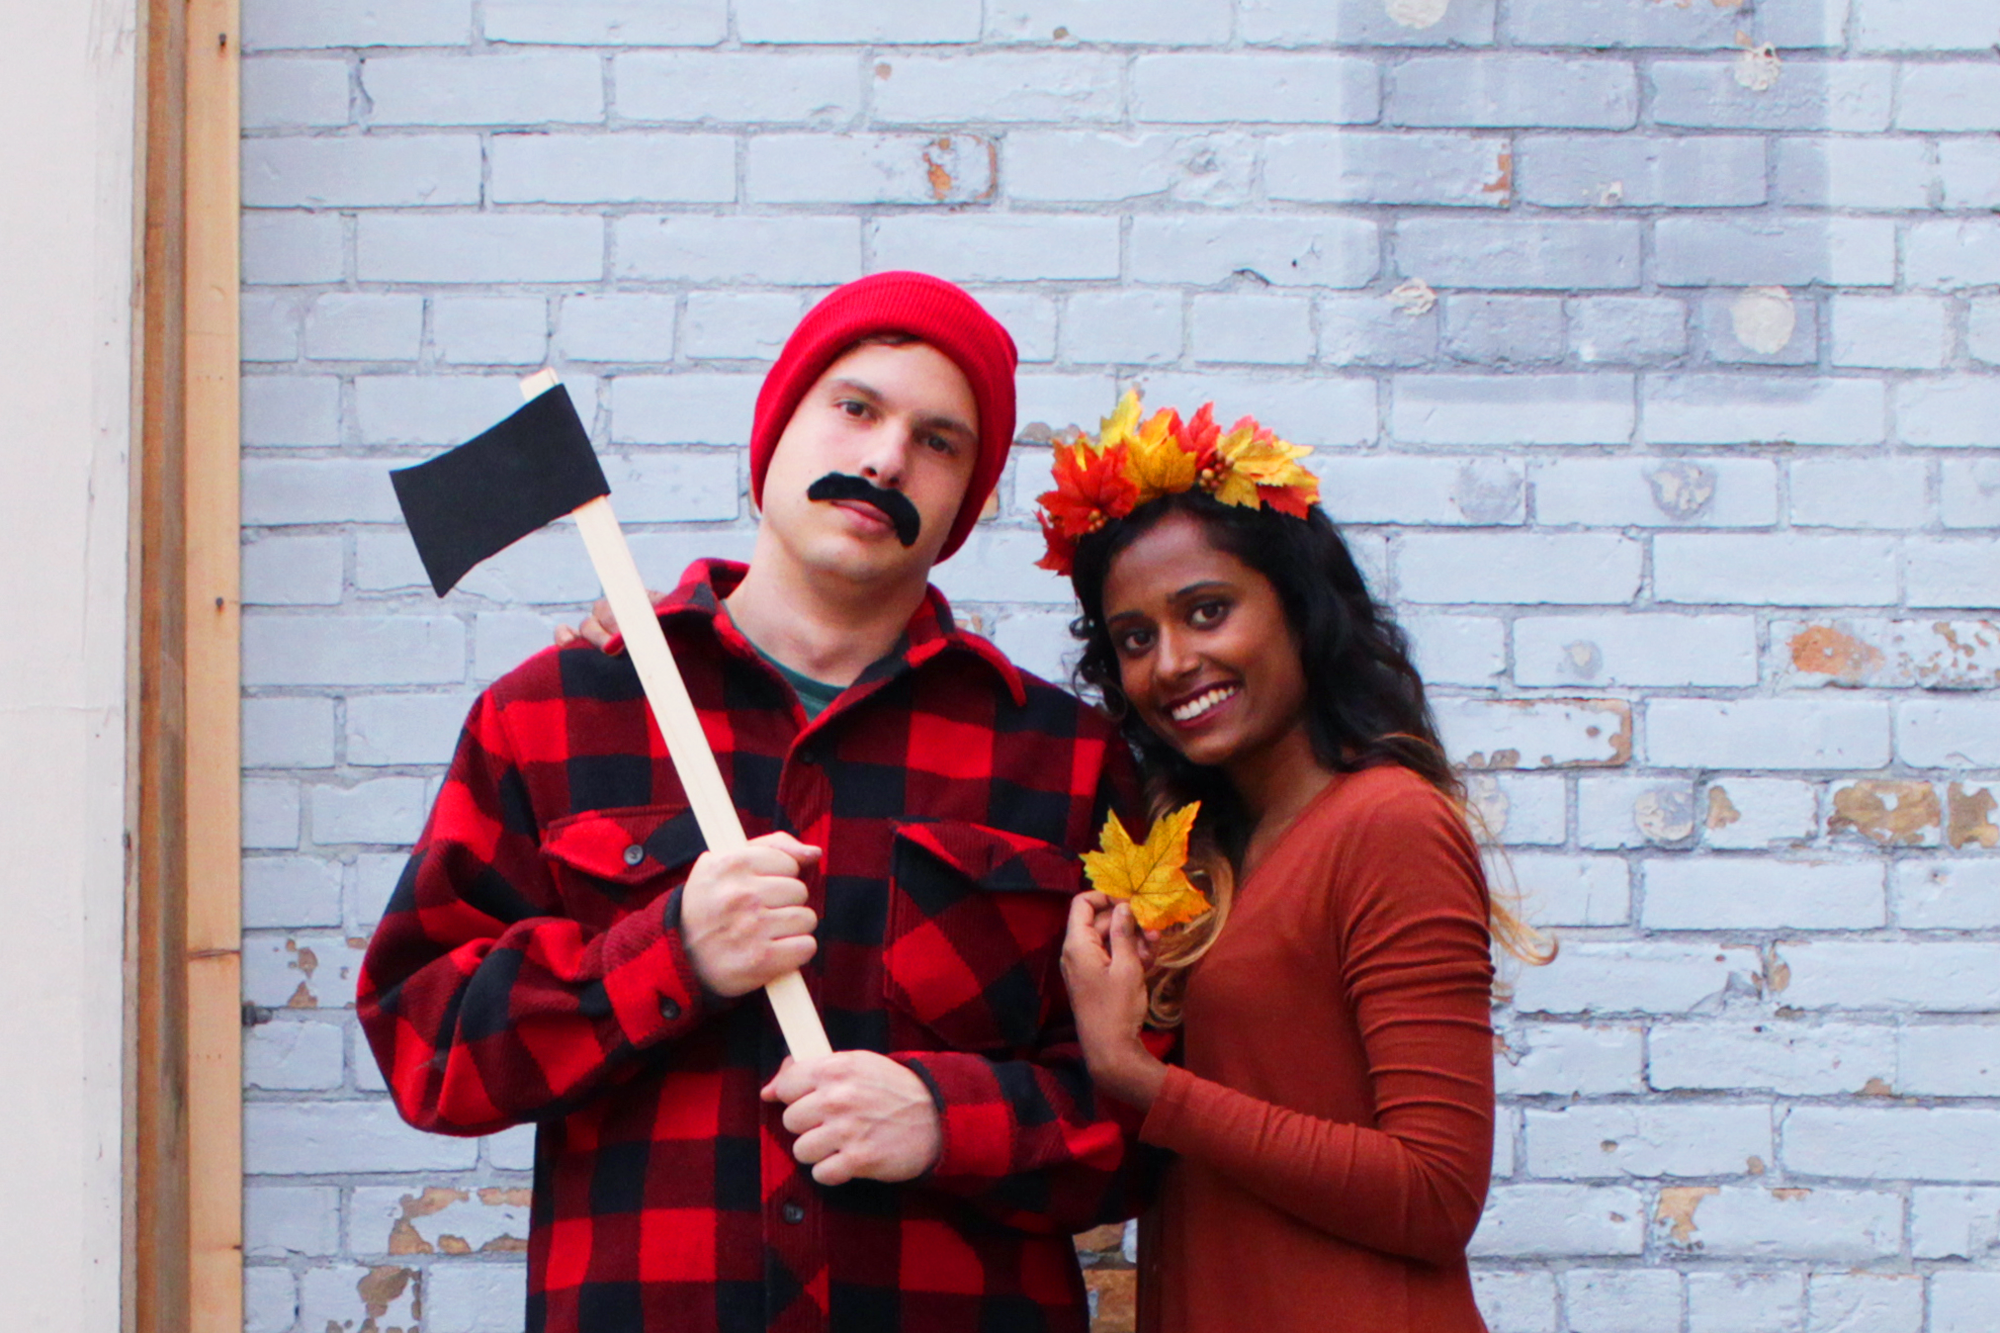 DIY Halloween Couples Costume | Lumberjack & a Tree - Fish & Bull